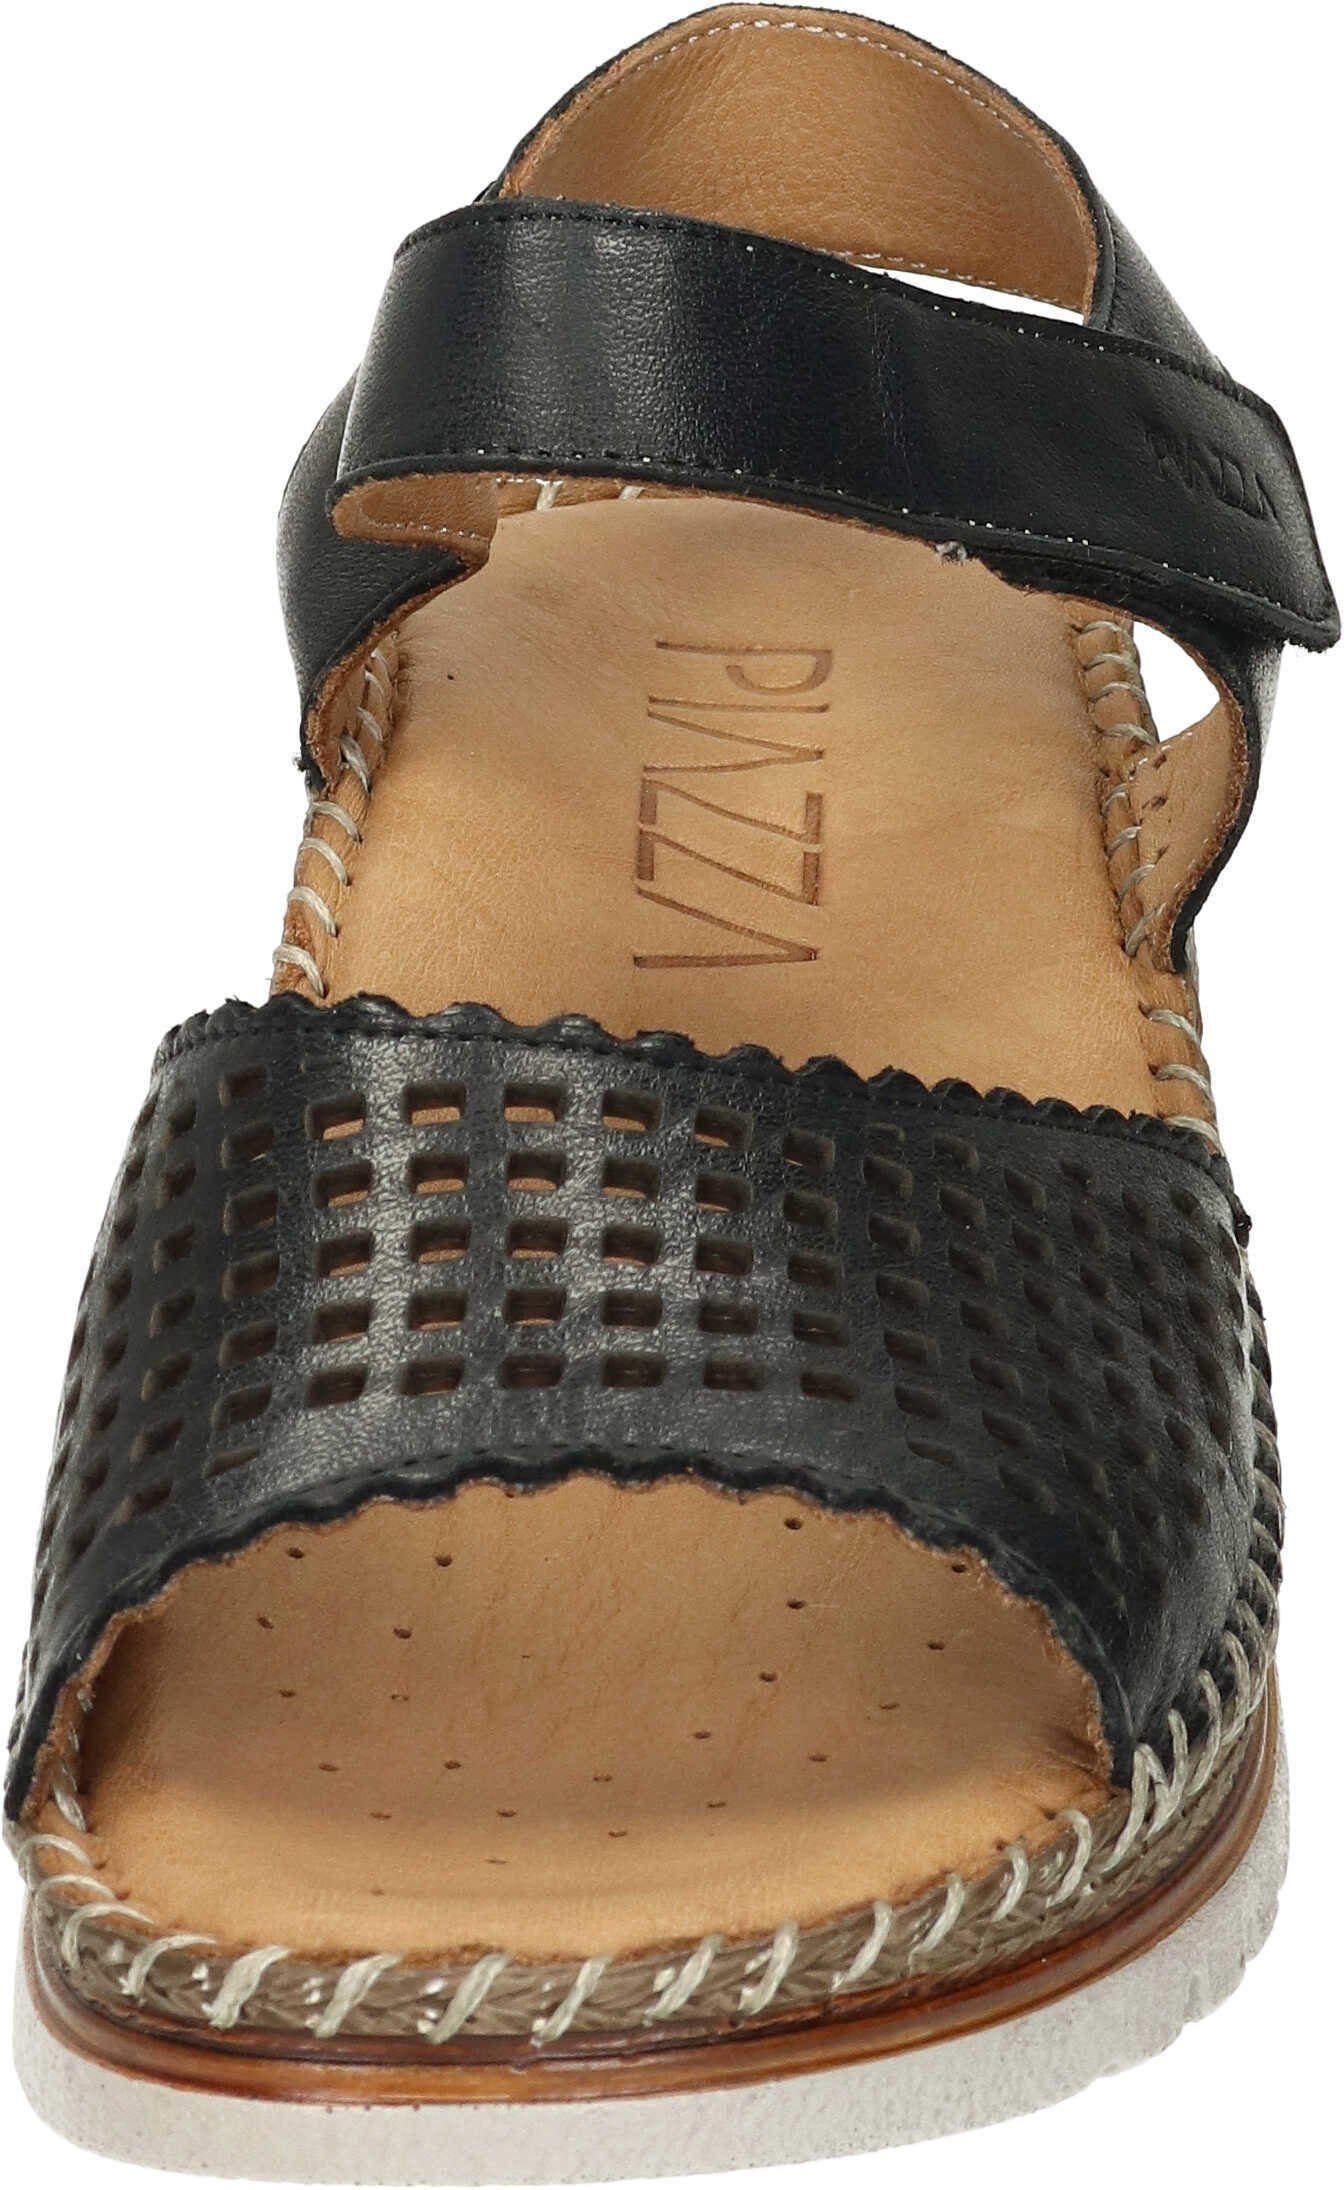 Sandalen Leder schwarz Sandalette echtem Piazza aus